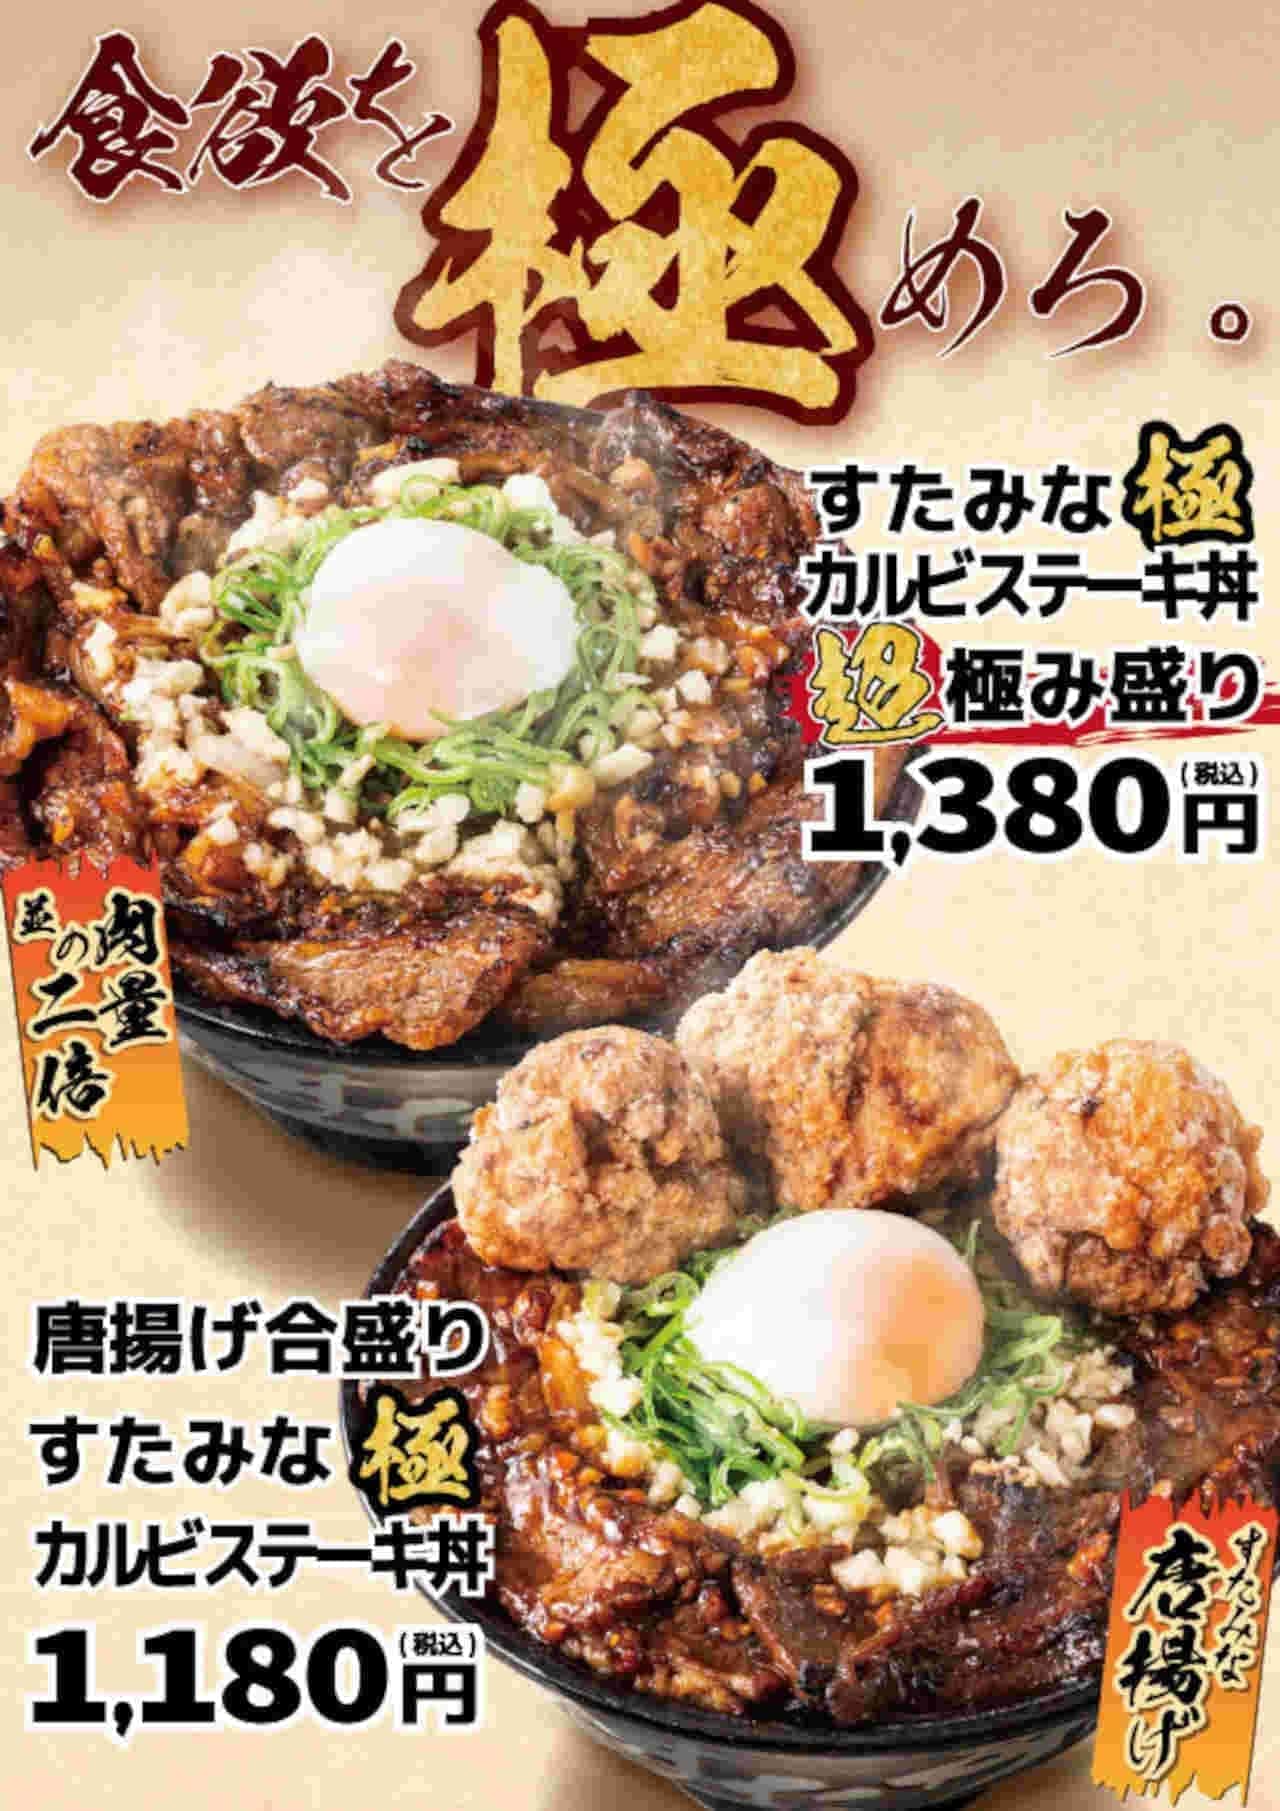 Legendary Sutadon restaurant "Sutamina Goku Calvi Steak Bowl" etc.